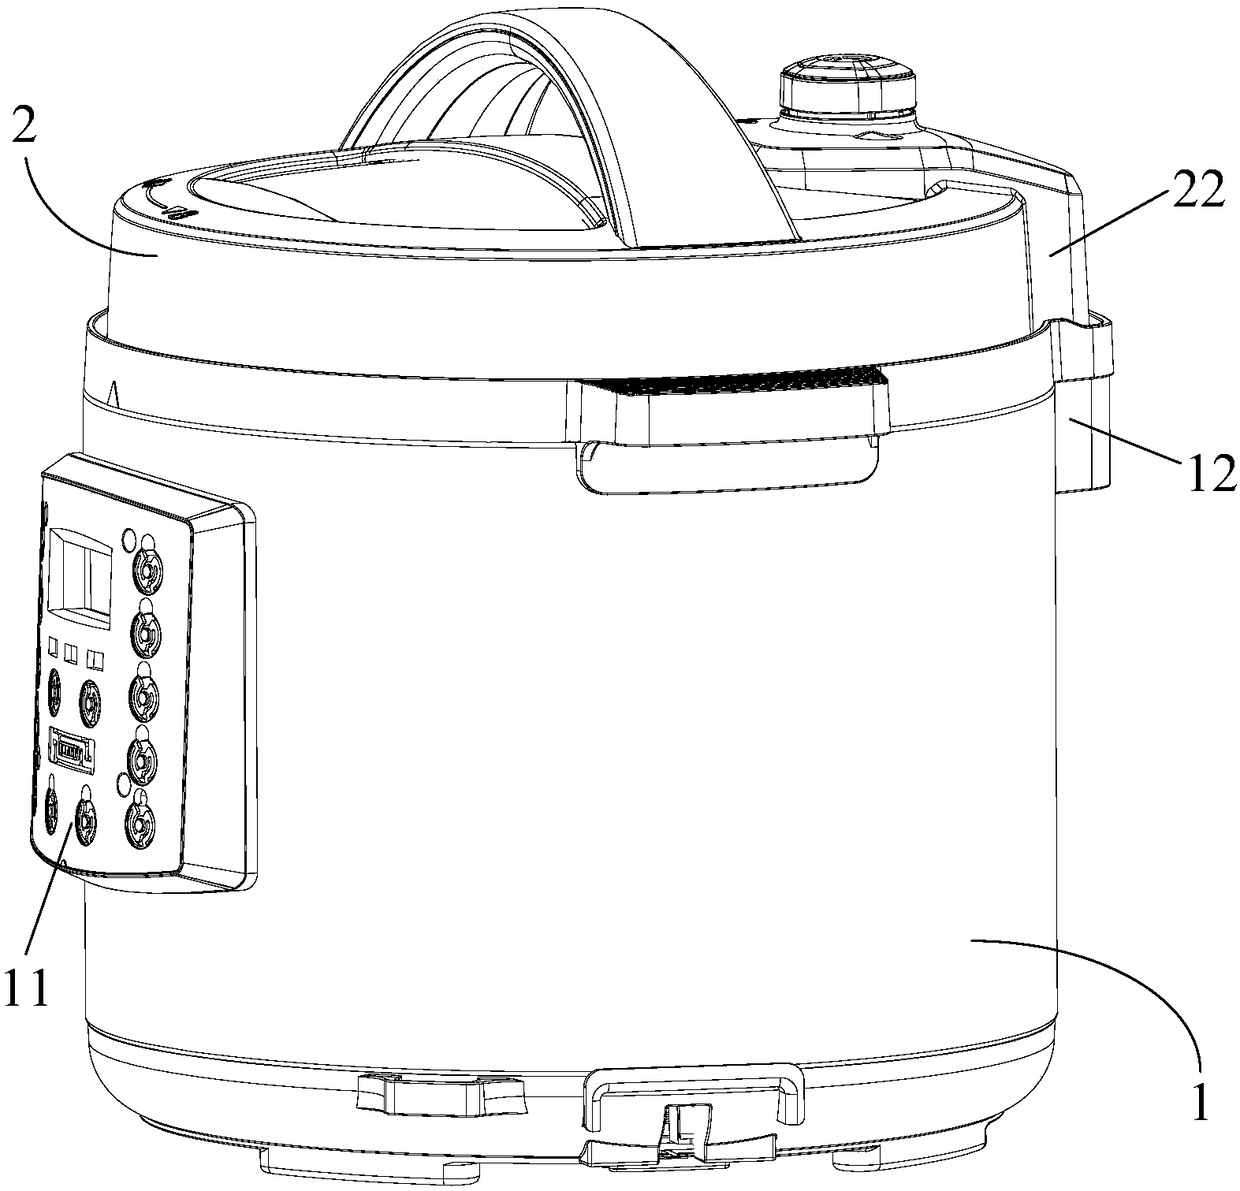 Split-type electric pressure cooker